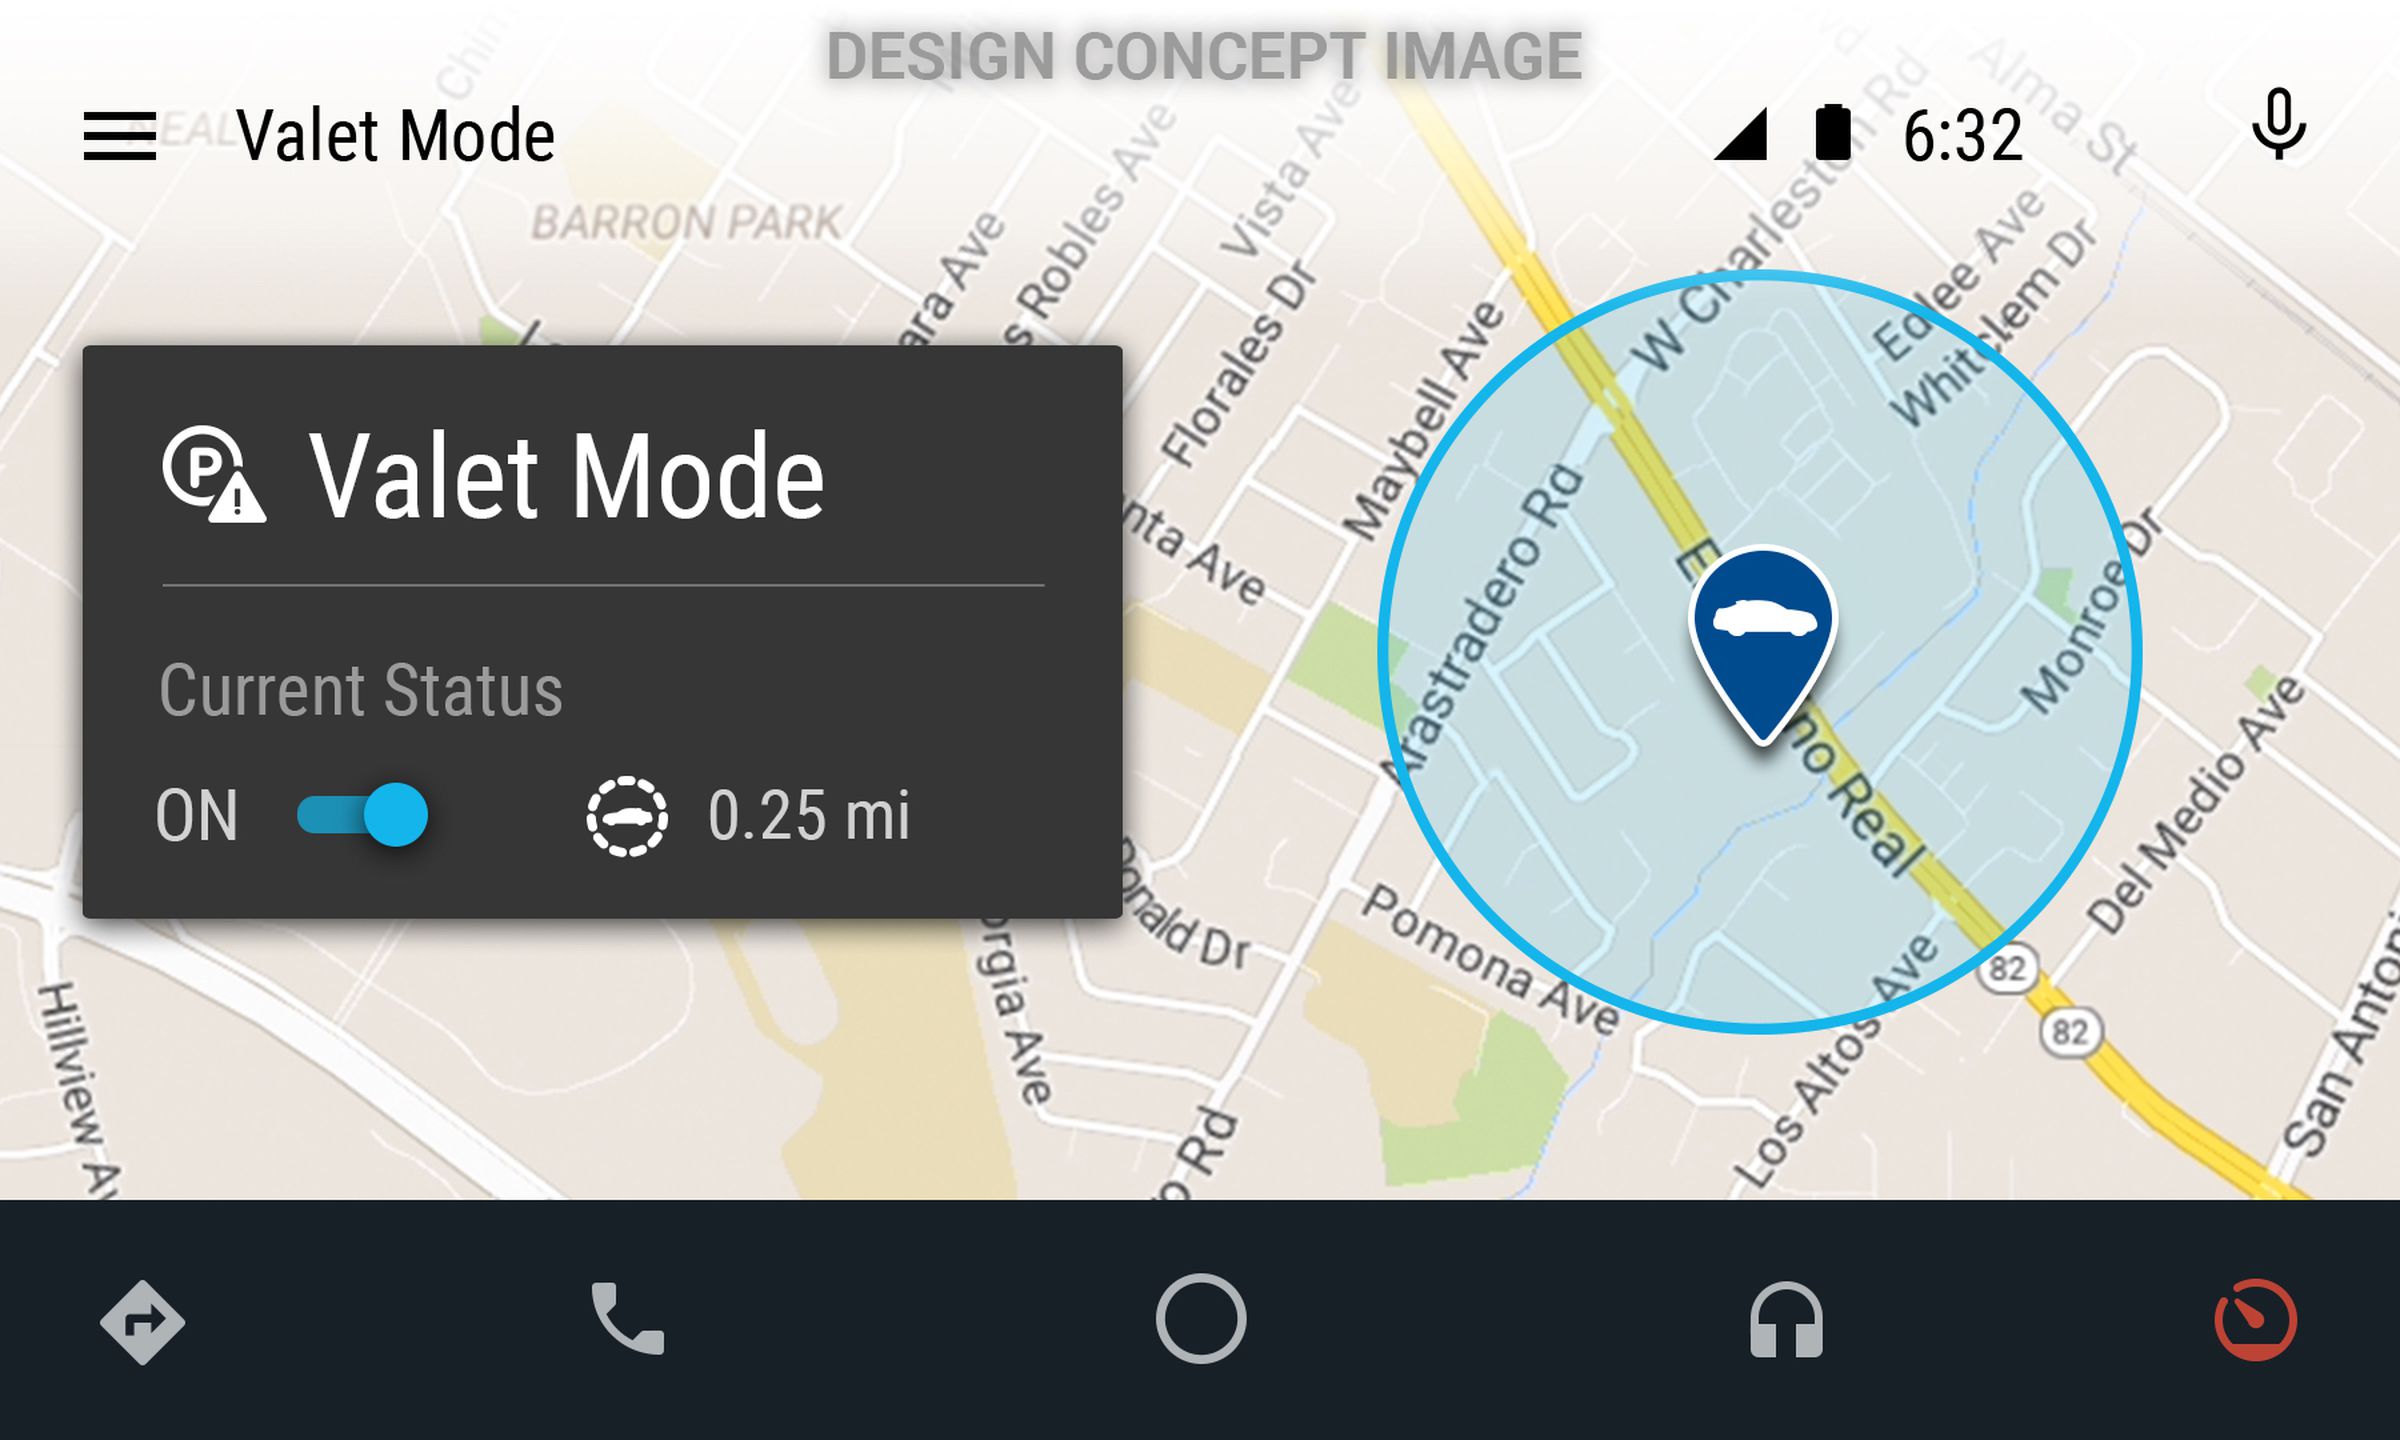 Hyundai Android Auto app photos